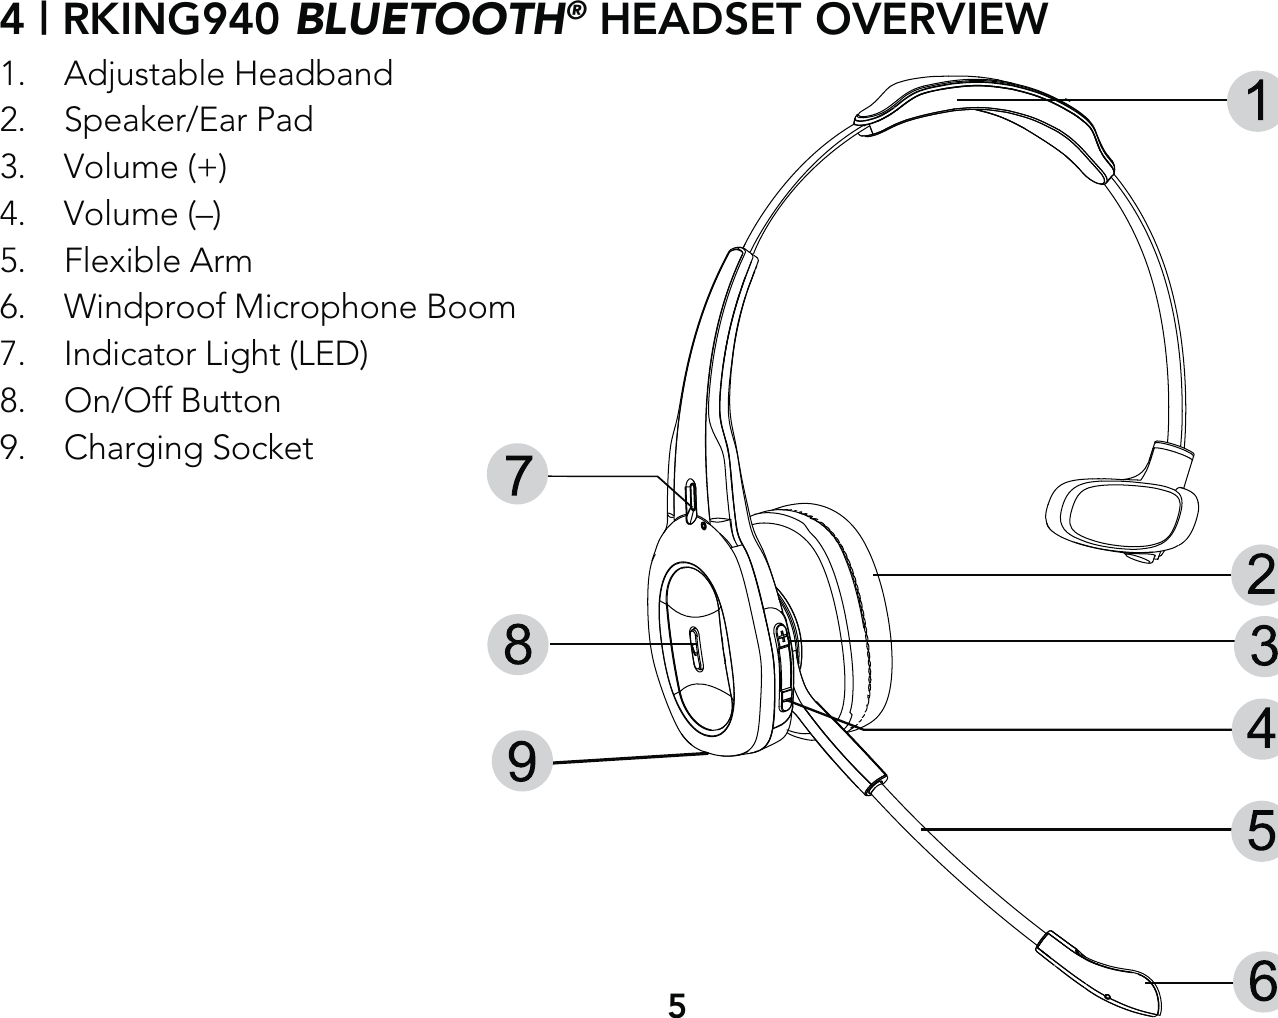 4 | RKING940 BLUETOOTH® HEADSET OVERVIEW1. Adjustable Headband 2. Speaker/Ear Pad 3. Volume (+) 4. Volume (–) 5. Flexible Arm 6. Windproof Microphone Boom 7. Indicator Light (LED) 8. On/Off Button 9. Charging Socket5